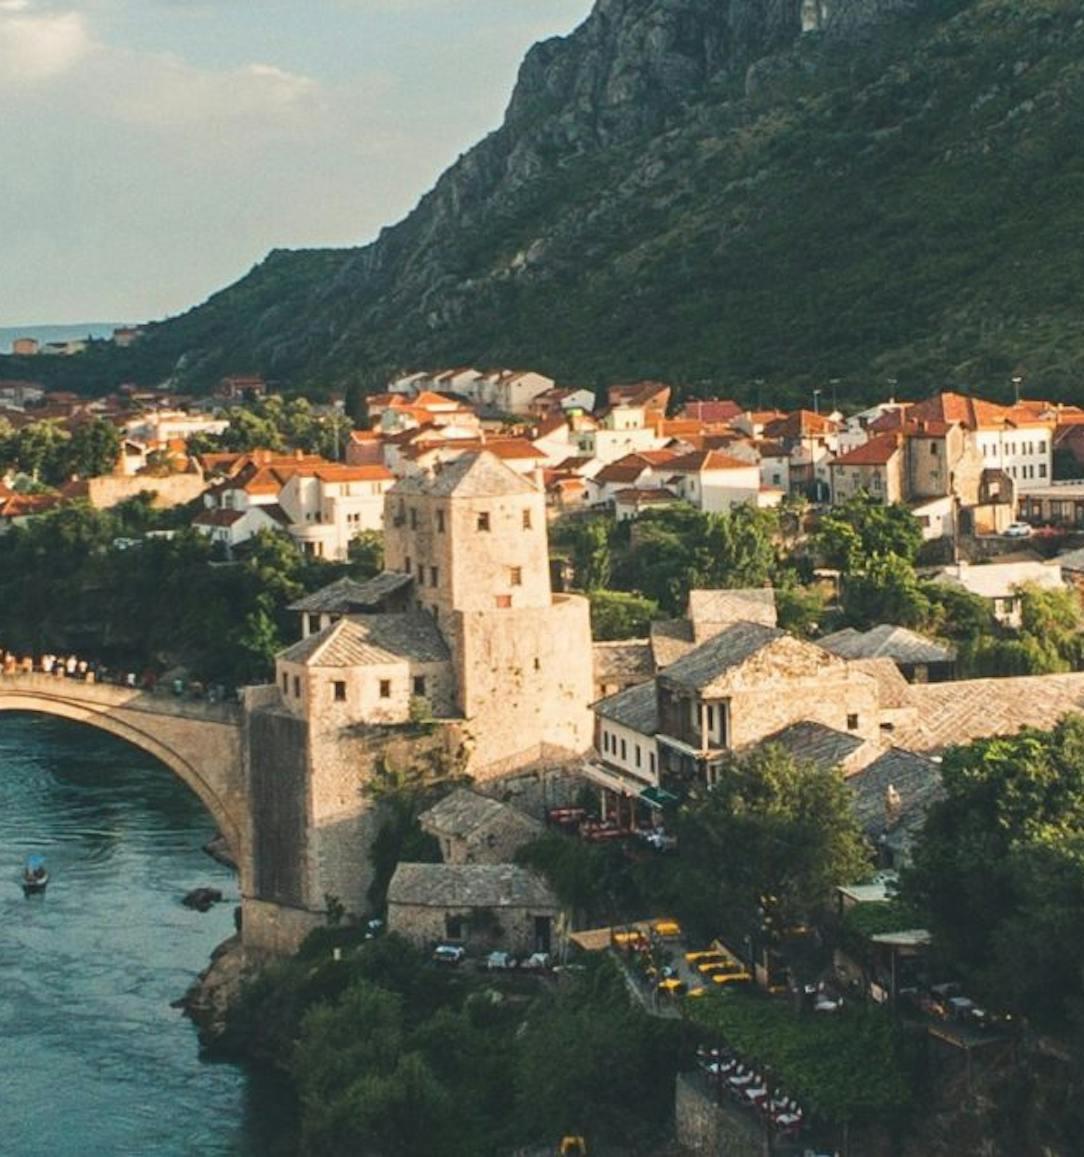 Bosnia-Herz. Total Investment (ann. var. %) FocusEconomics